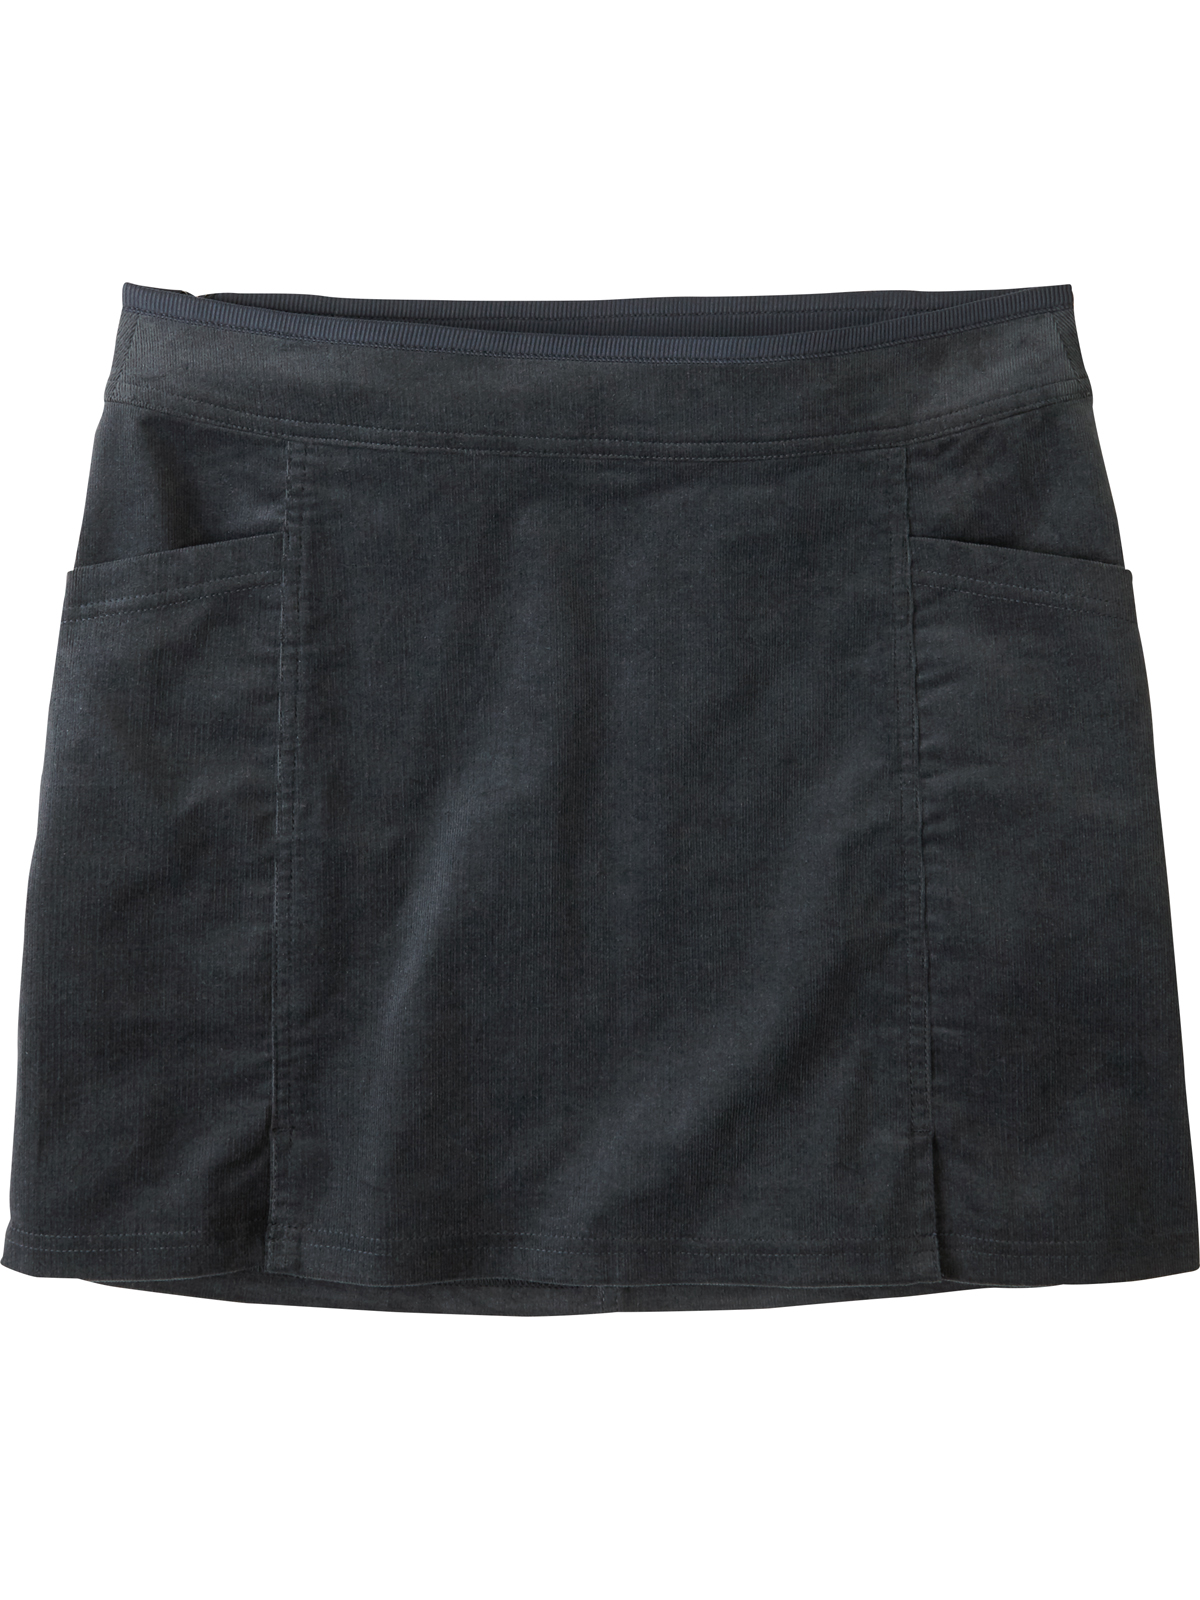 Kuhl Clothing Corduroy Skirt Detail | Title Nine